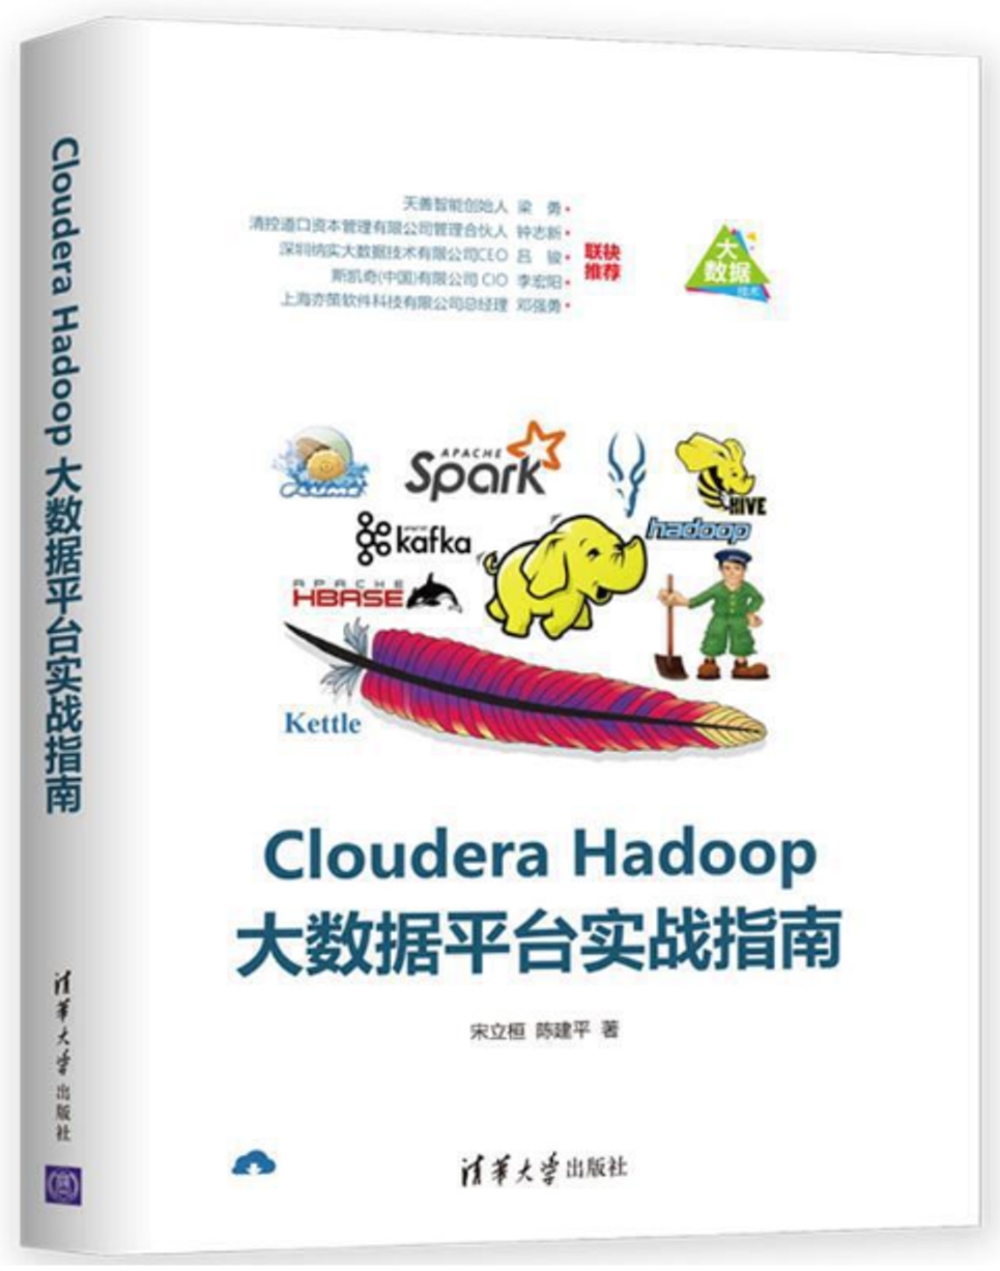 Cloudera Hadoop大數據平台實戰指南